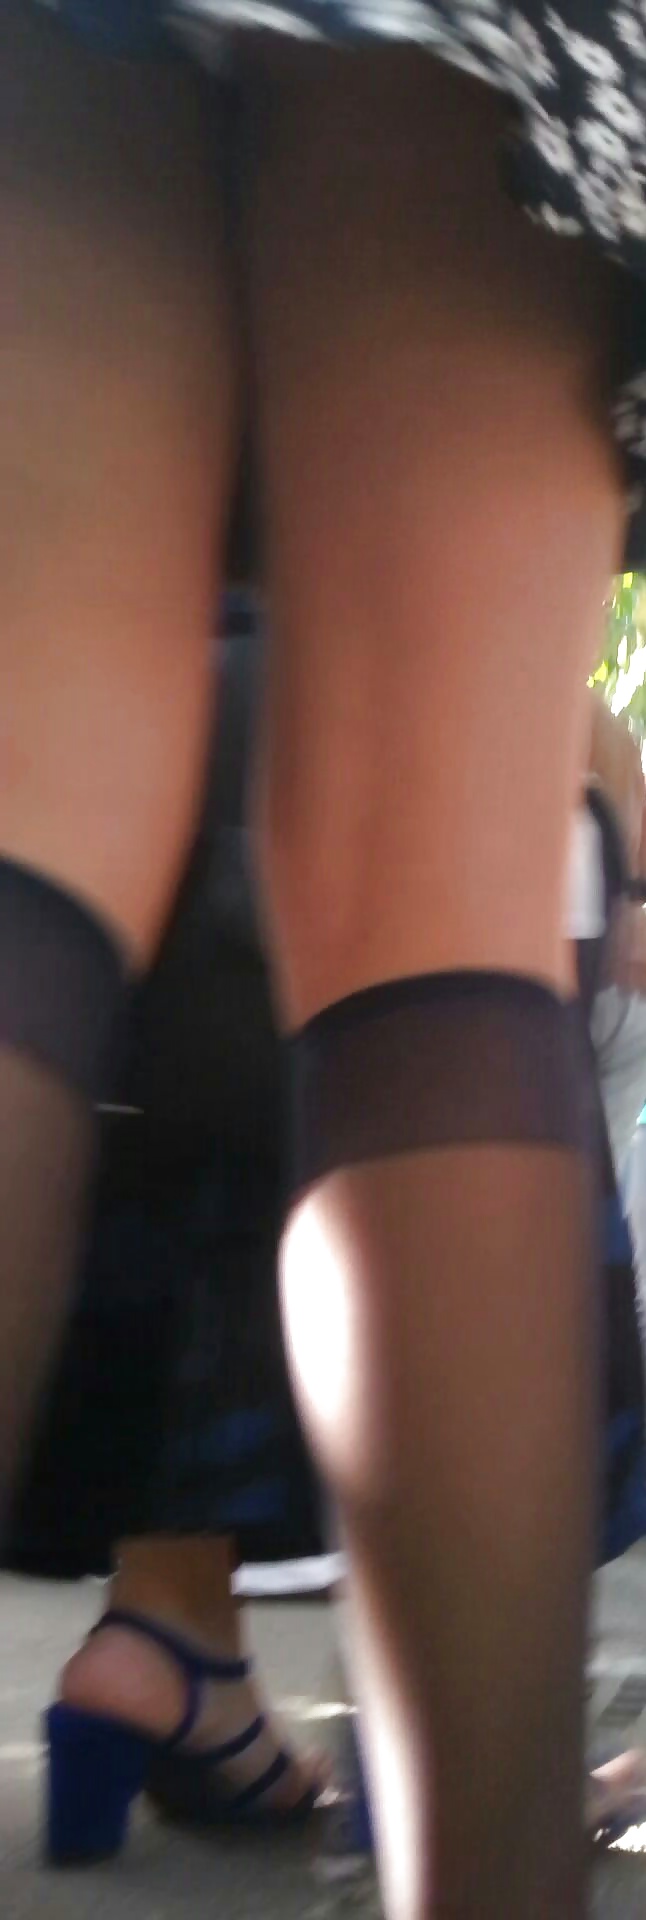 Spy sexy teens skirt and feet romanian #32512289